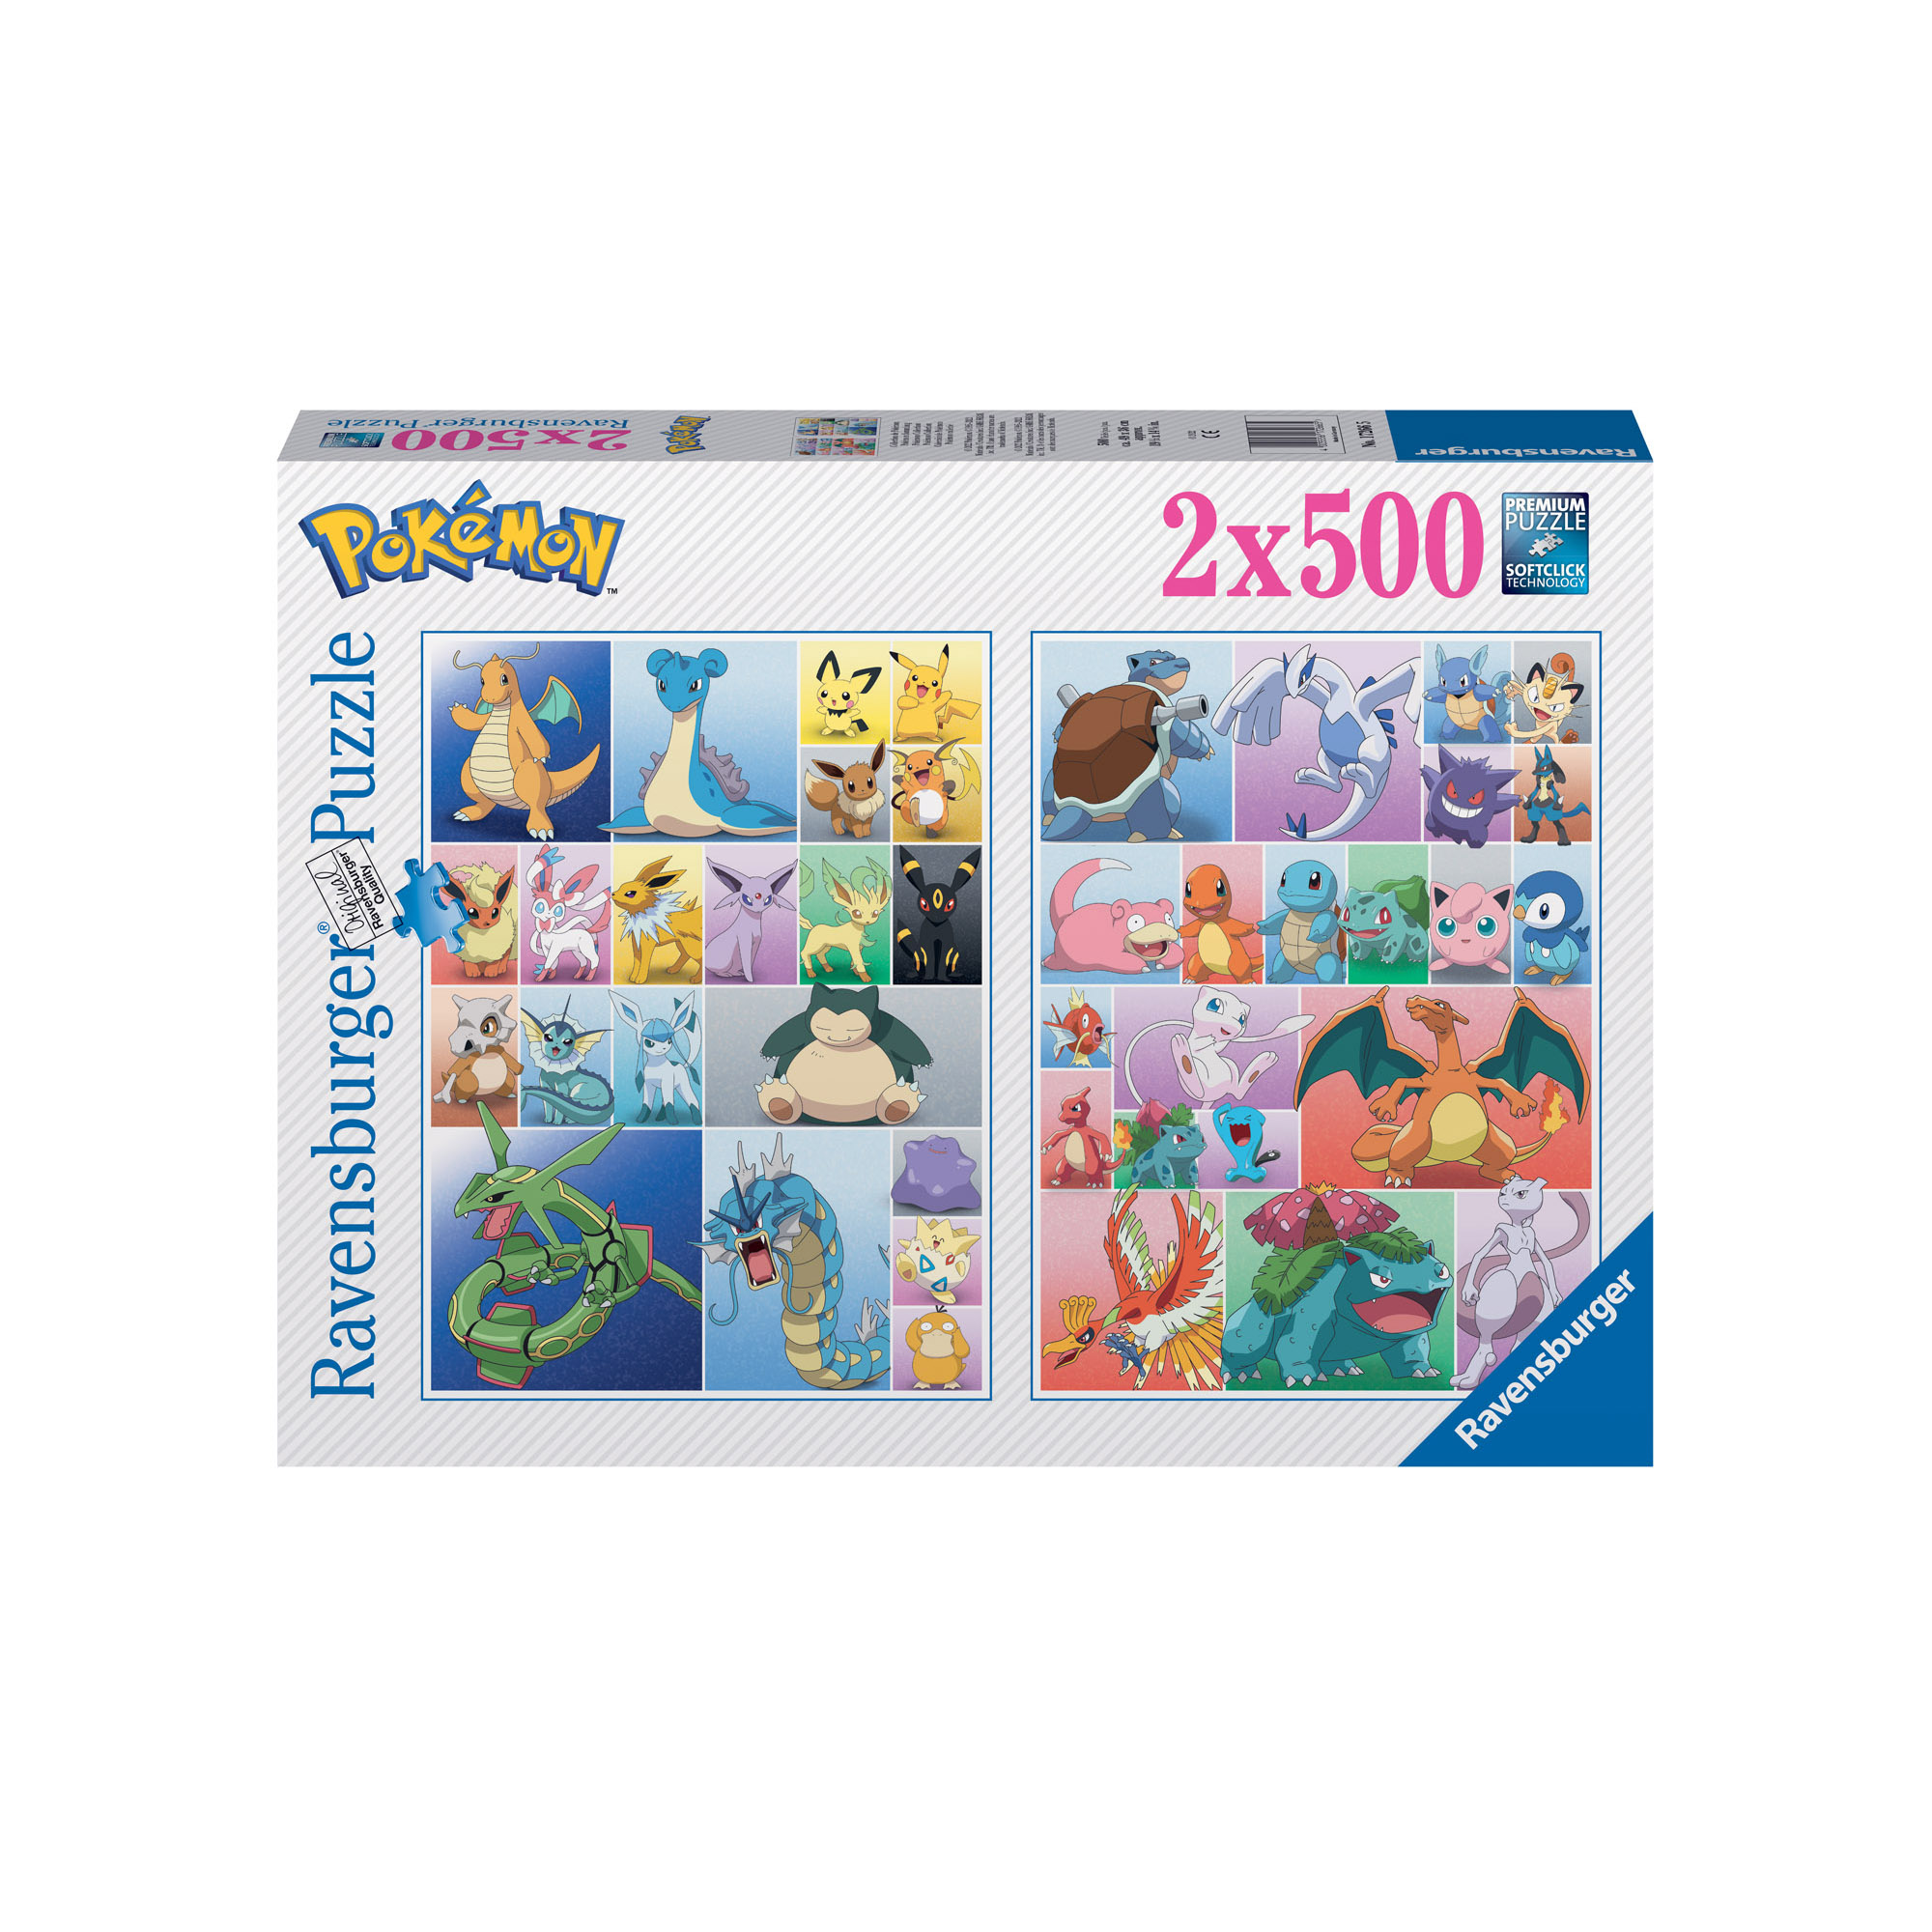 Ravensburger - puzzle pokémon, 2x500 pezzi, puzzle adulti - RAVENSBURGER